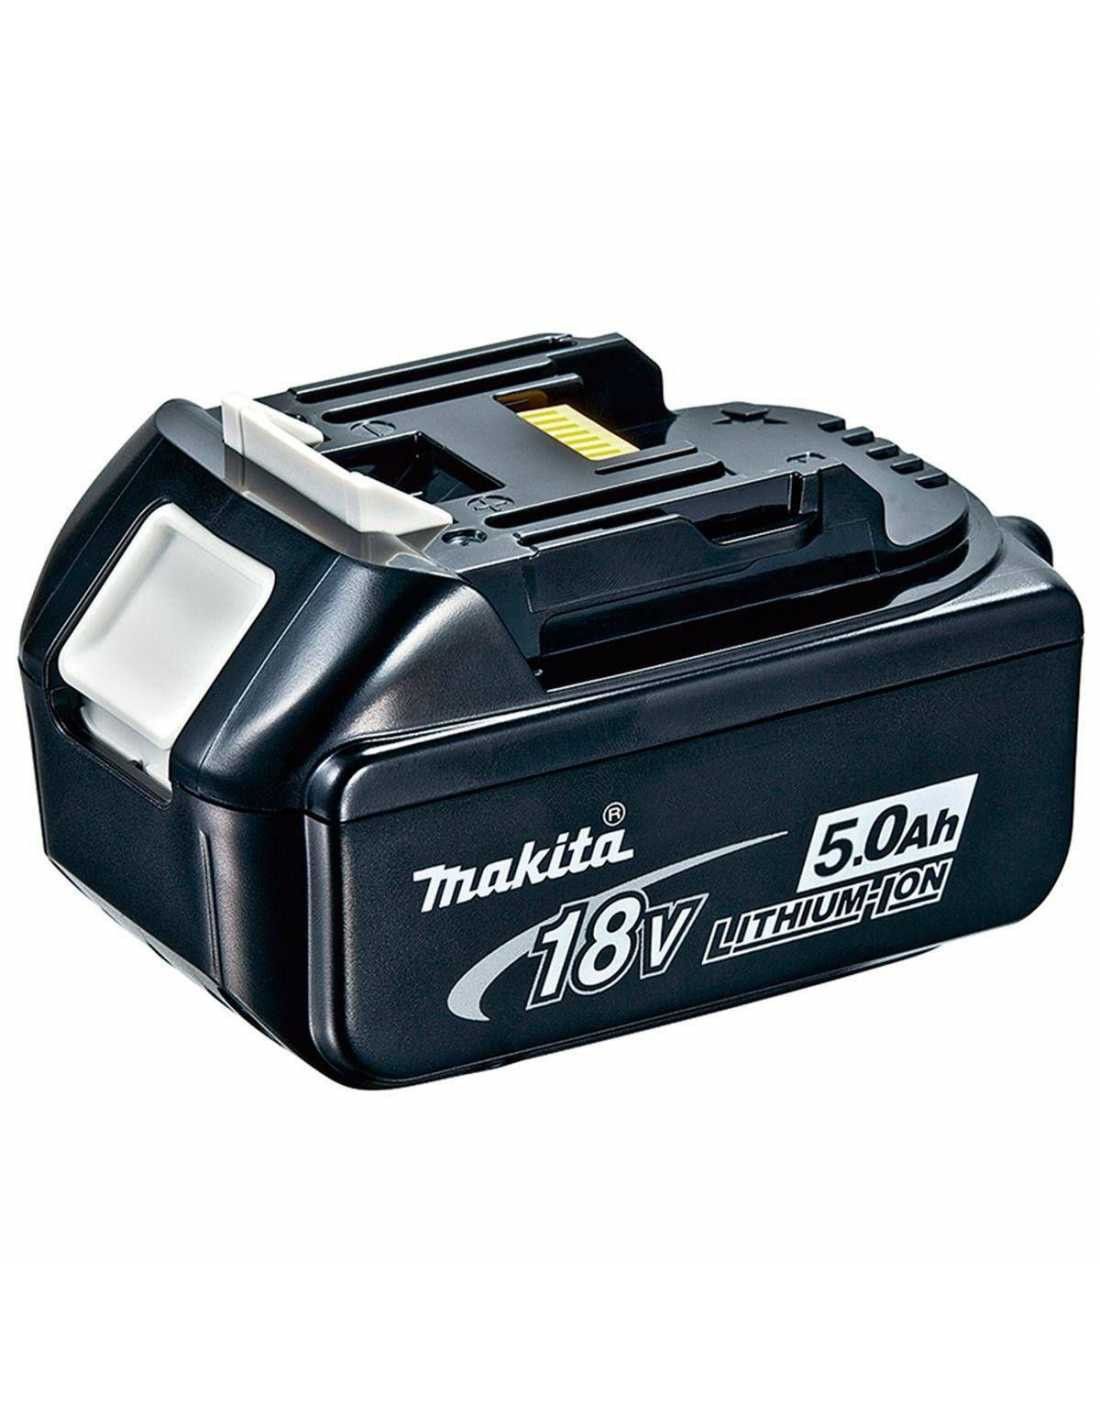 Makita DHP482 Hammer Drill Kit + DJV182 Jig Saw + 2bat 5Ah + charger + DLX2181BL2 bag